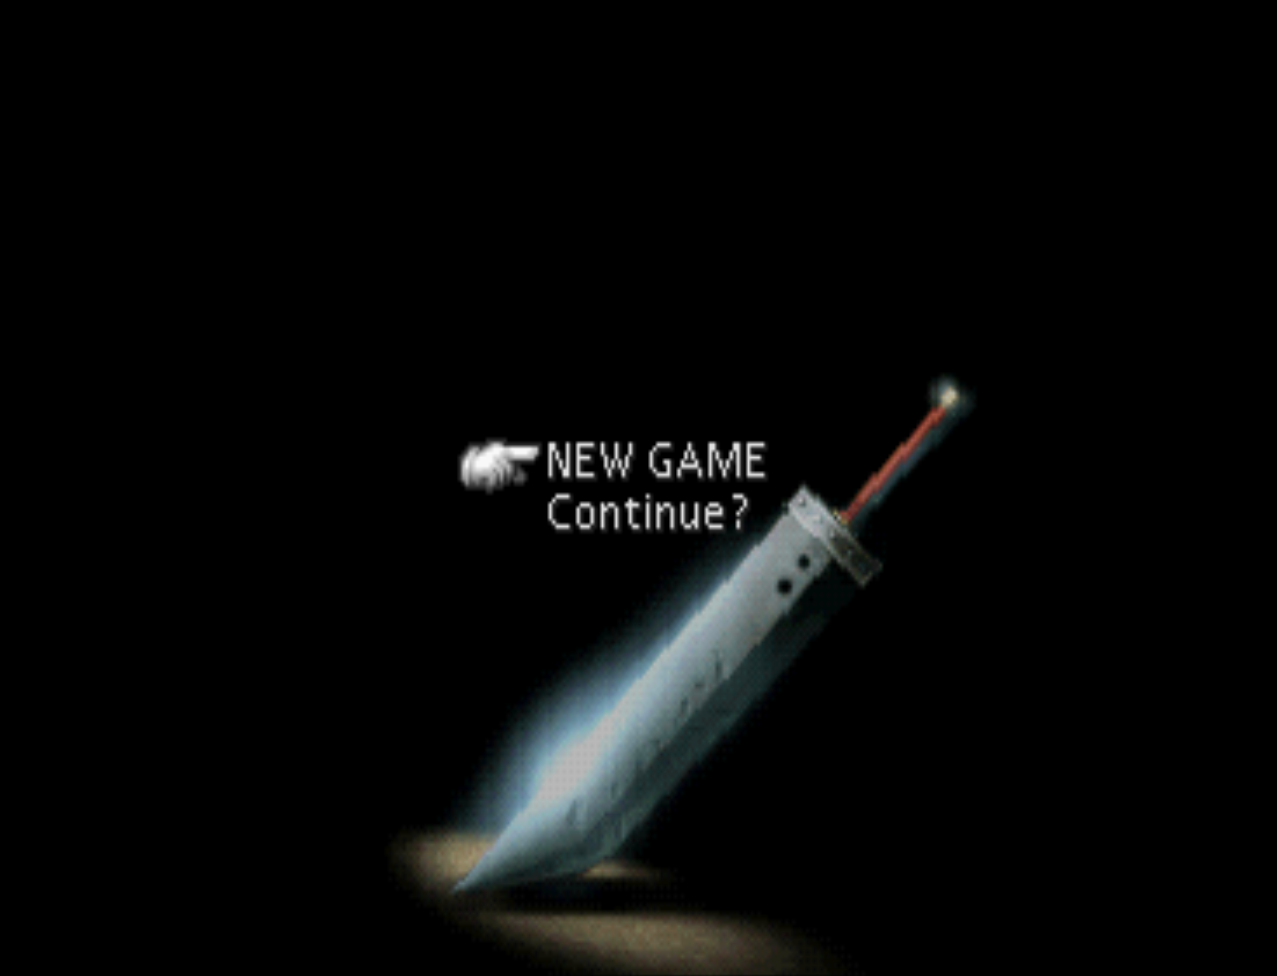 Final Fantasy VII Title Screen